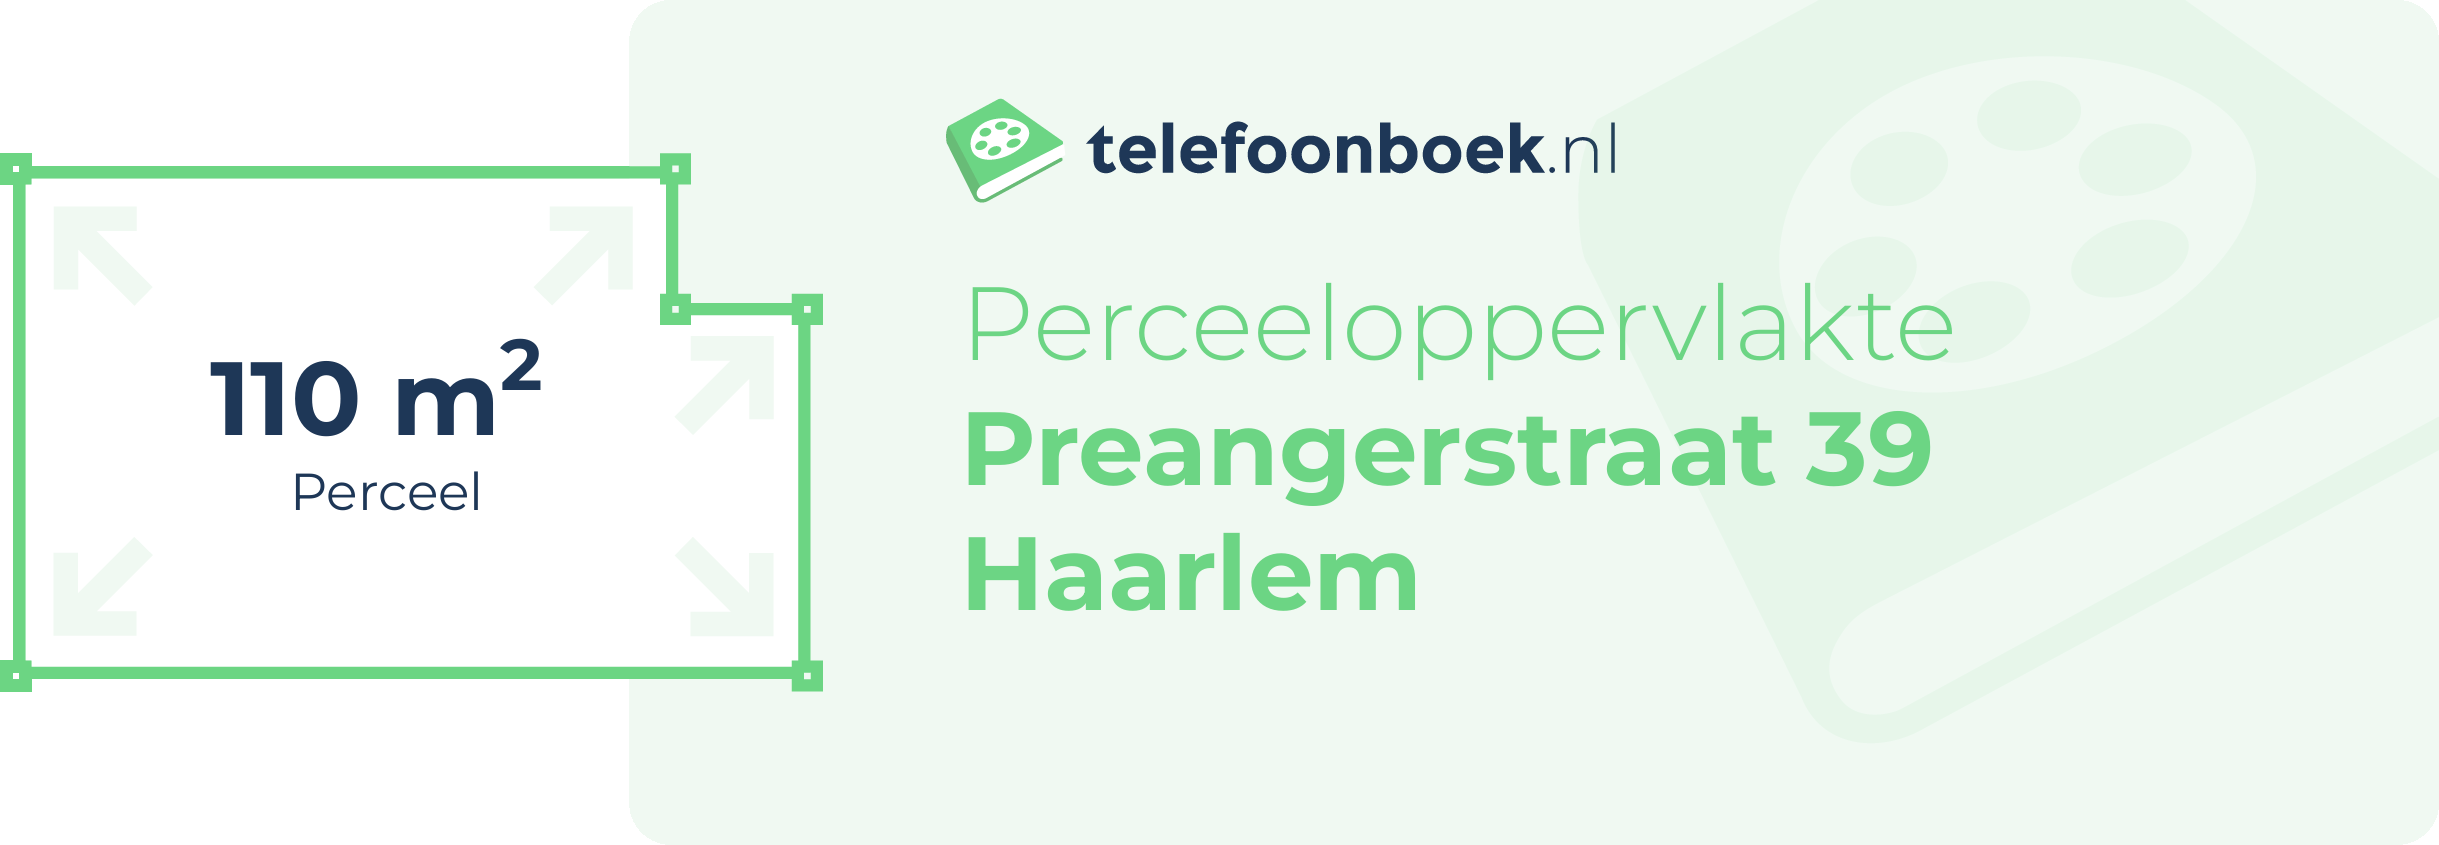 Perceeloppervlakte Preangerstraat 39 Haarlem